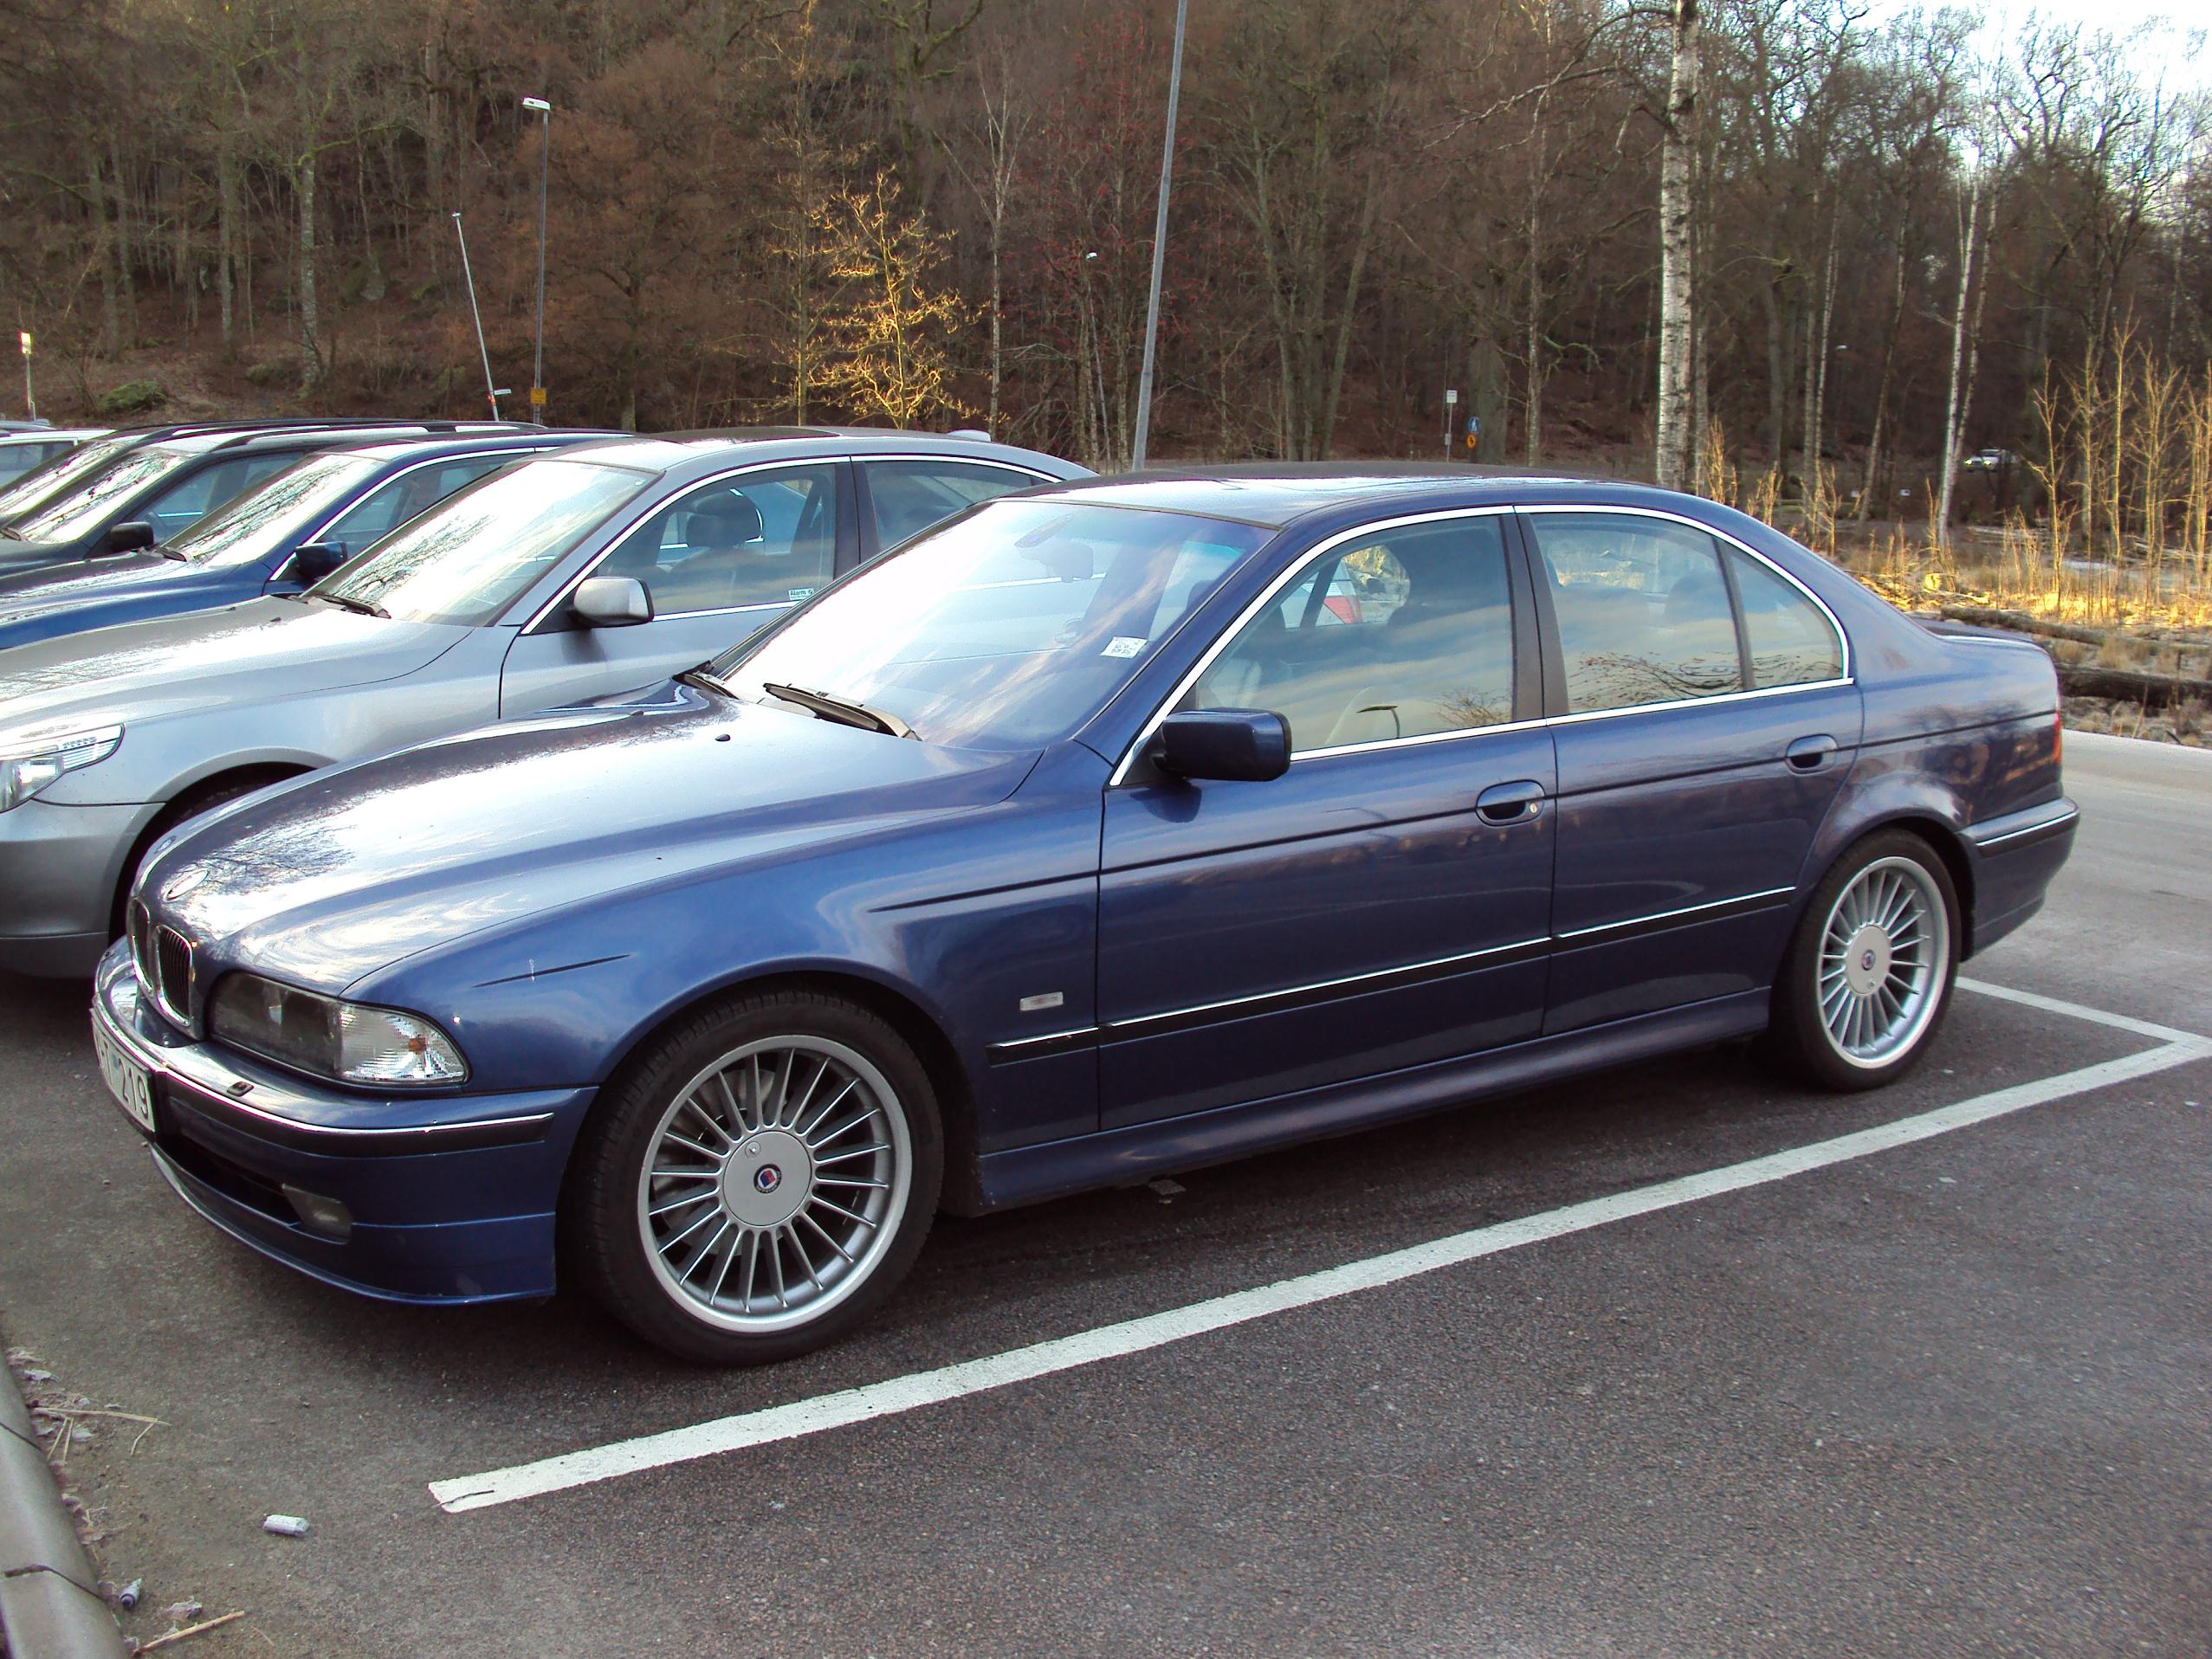 BMW Alpina B10 V8 | Flickr - Photo Sharing!